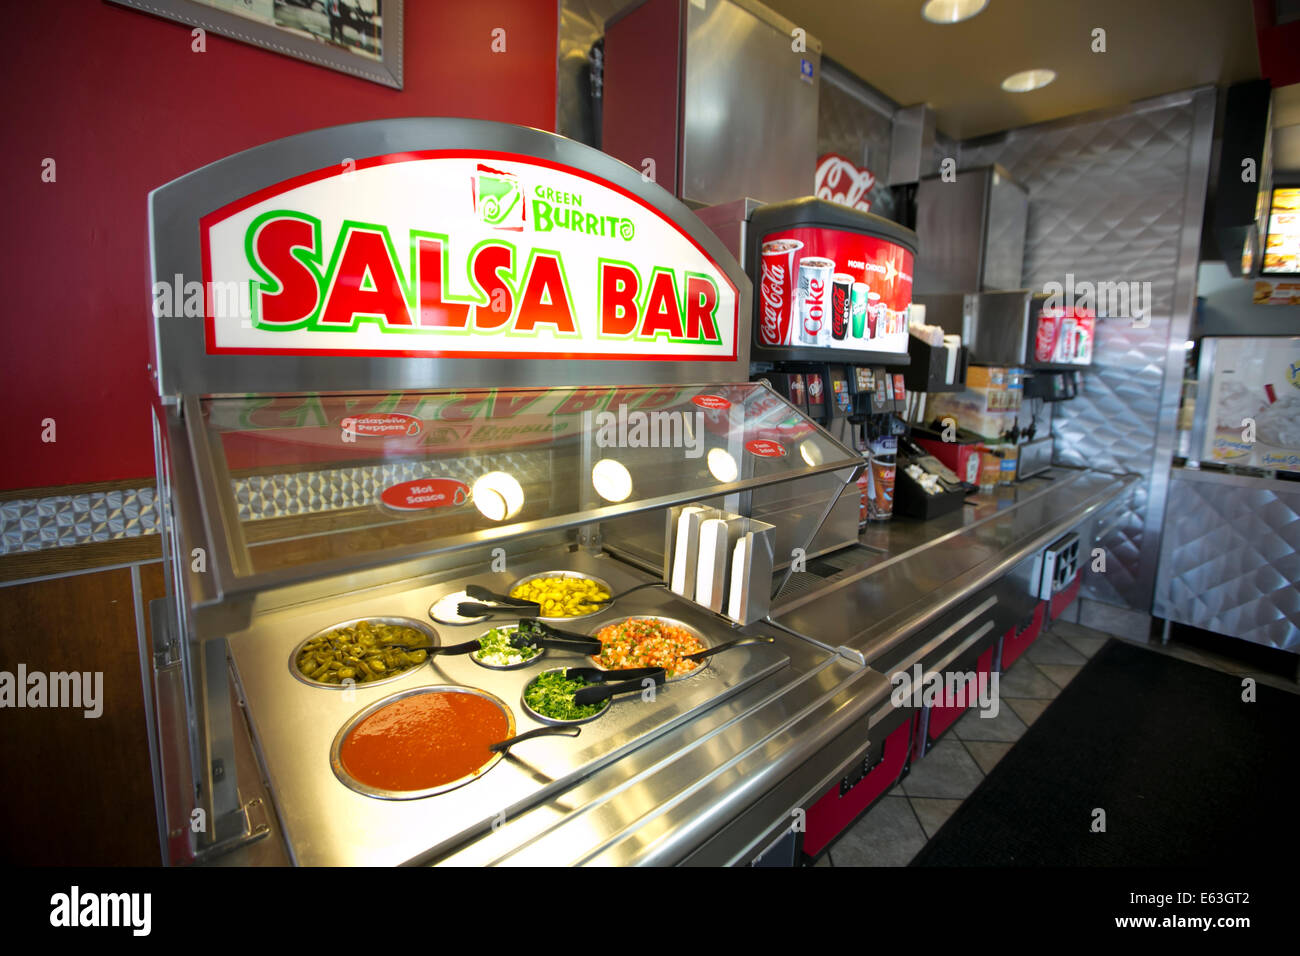 Salsa bar libre-service à Austin, Texas Carl's Jr. restaurant lieu. La chaîne de restauration rapide a la double-vert marque Burrito Banque D'Images